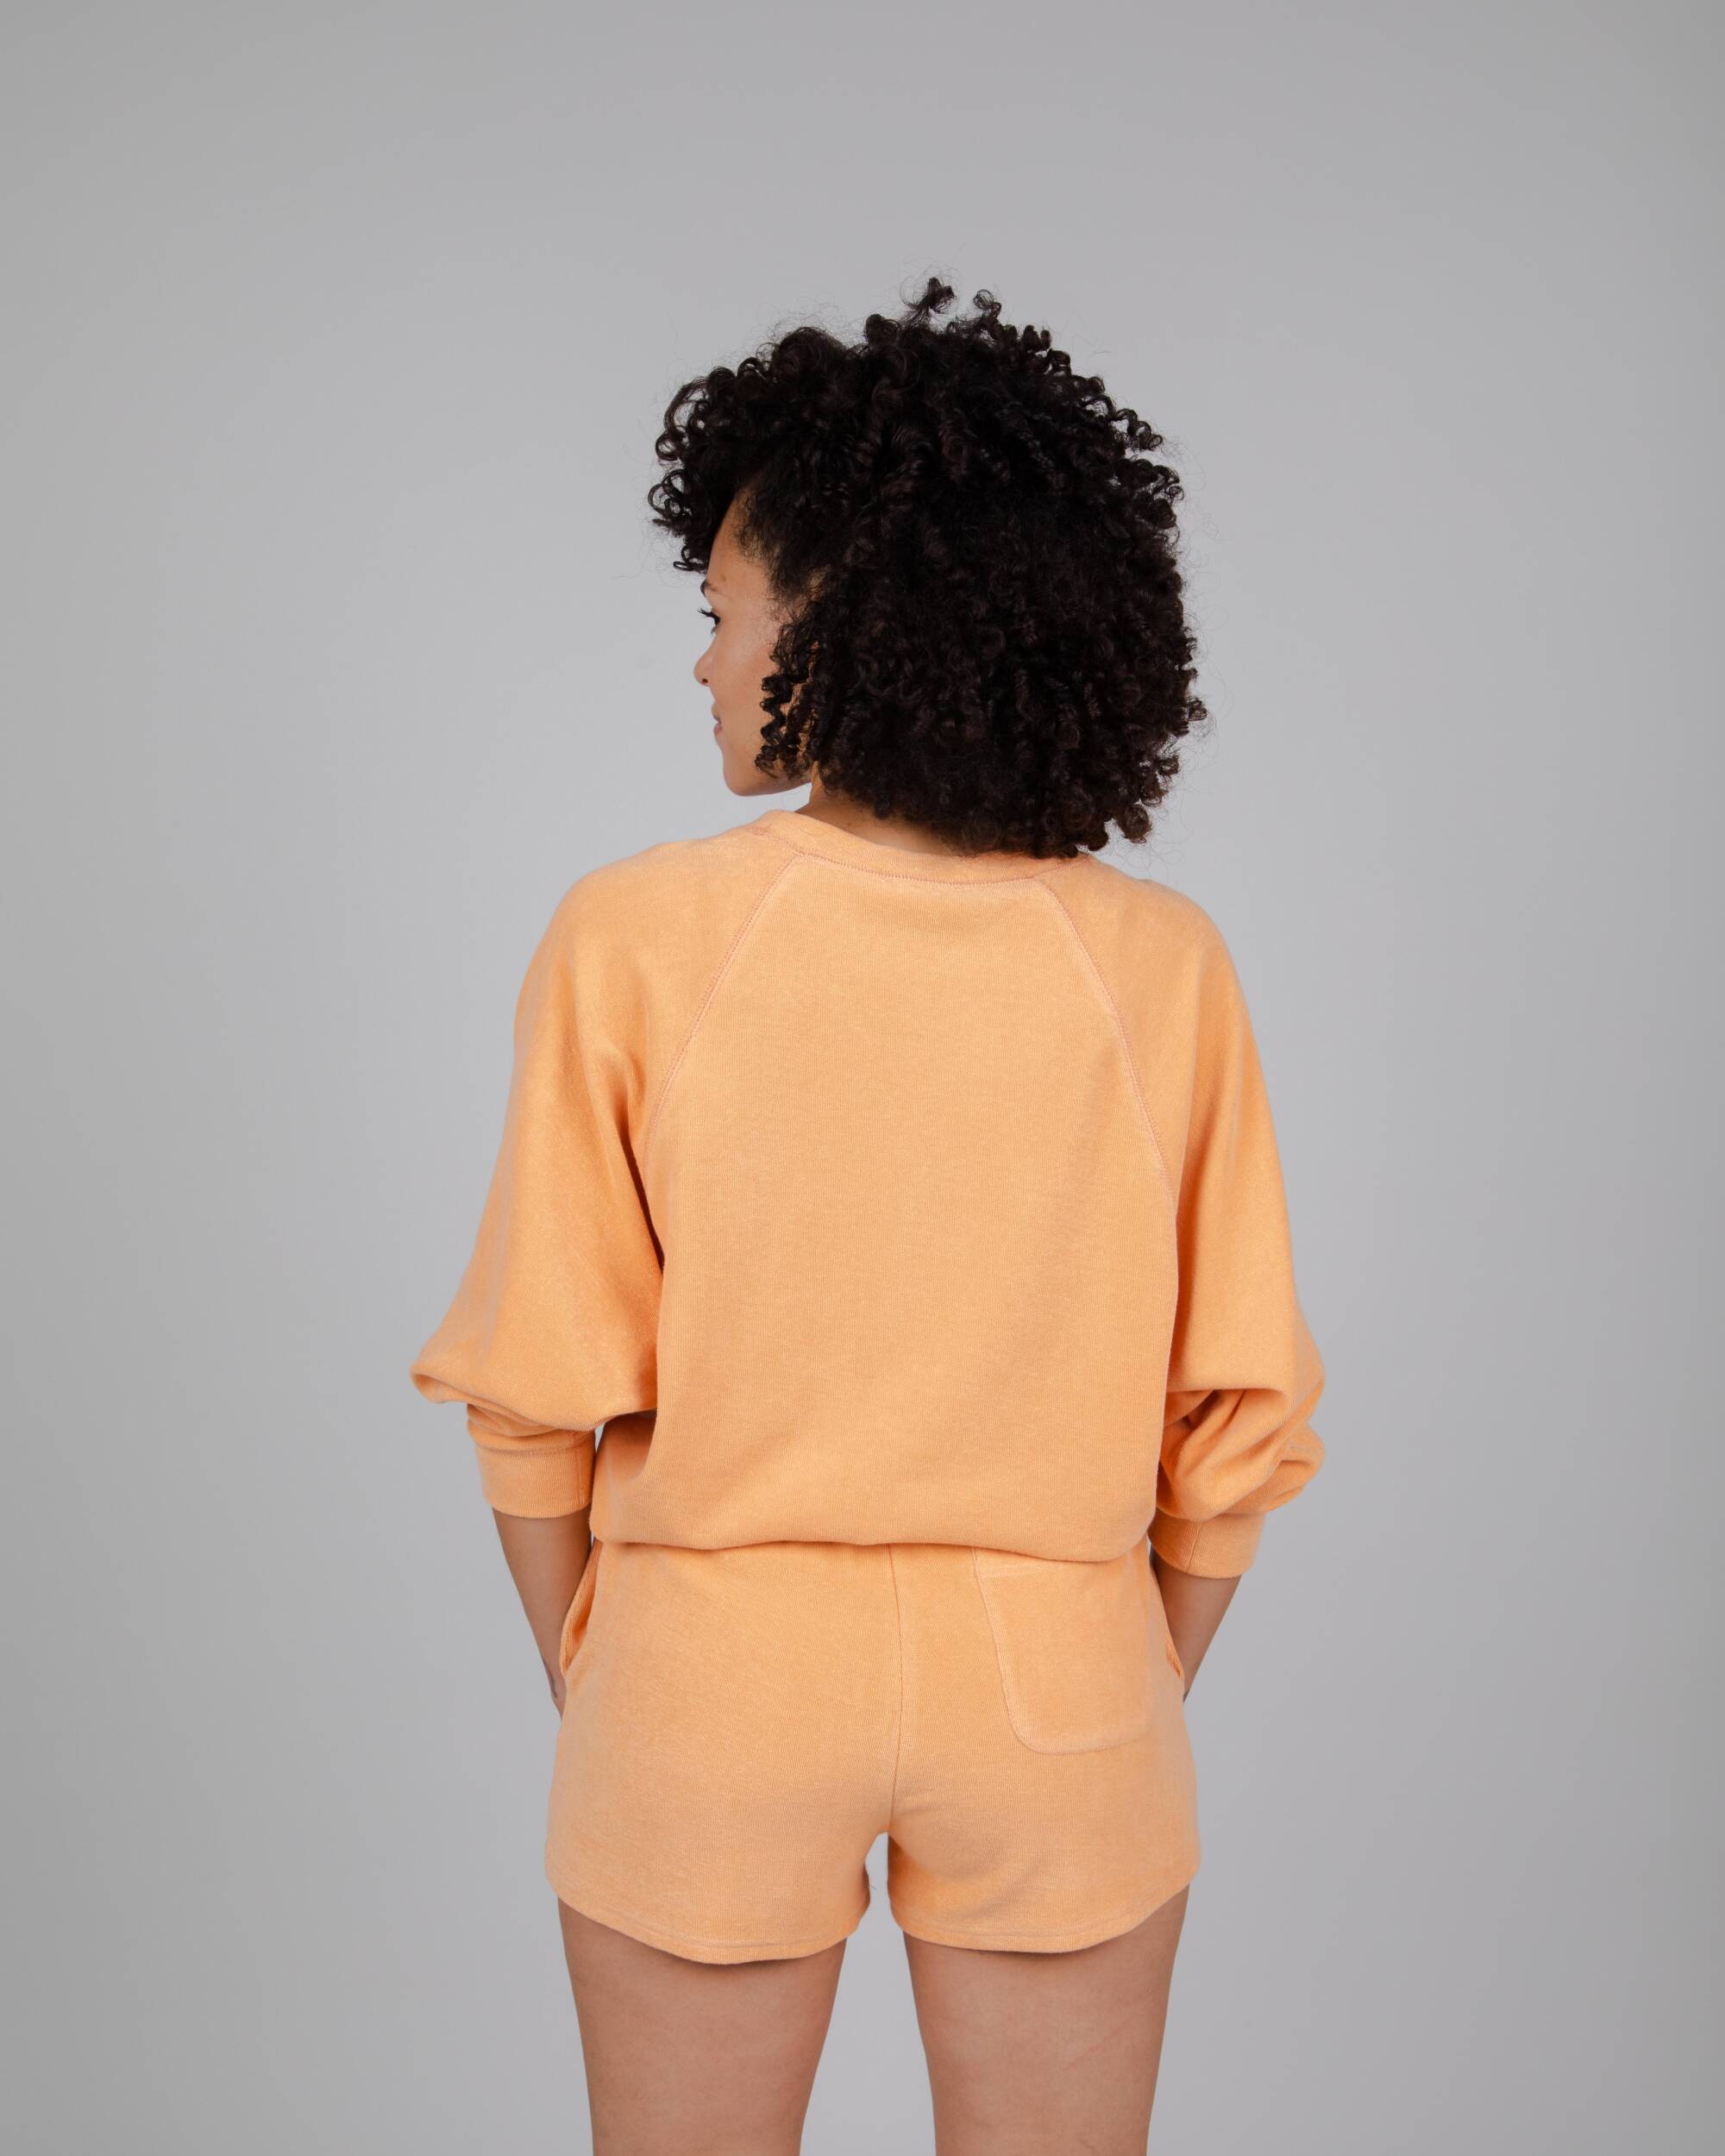 Orange sweater raglan made from 100% organic cotton from Brava Fabrics